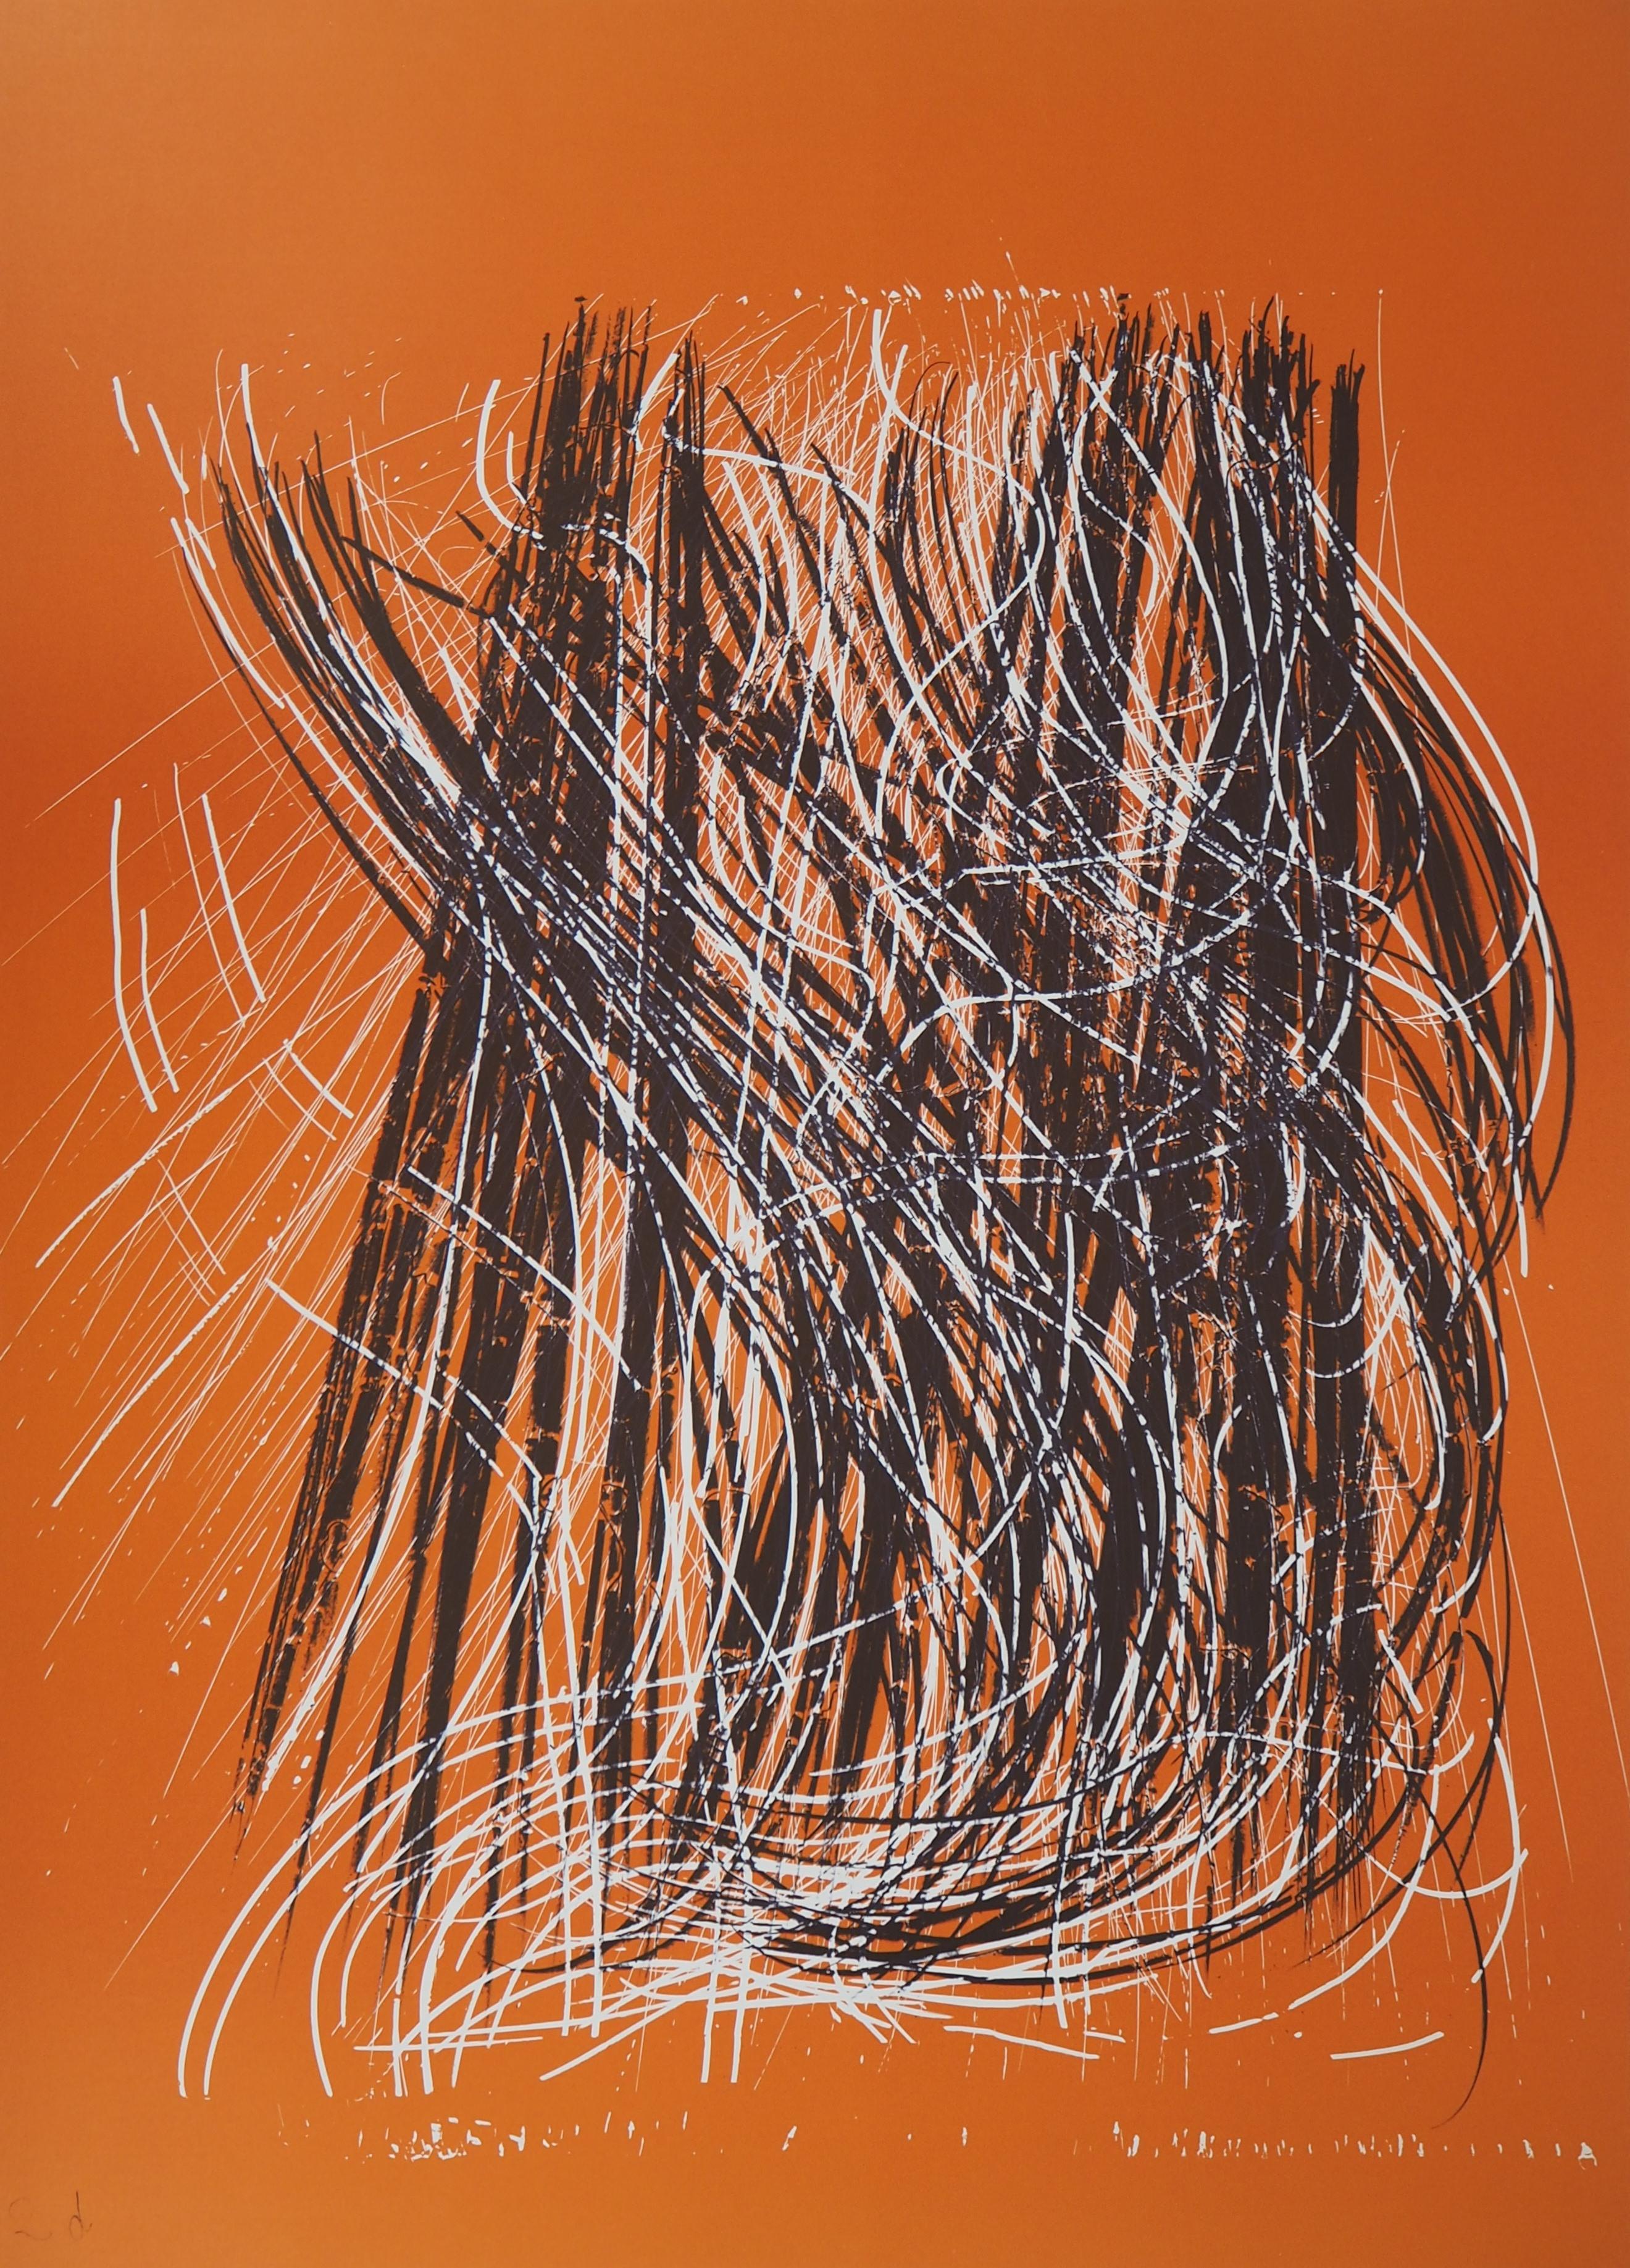 MS Orange Abstract Composition - Original Lithograph, 1971 (RMM #338)